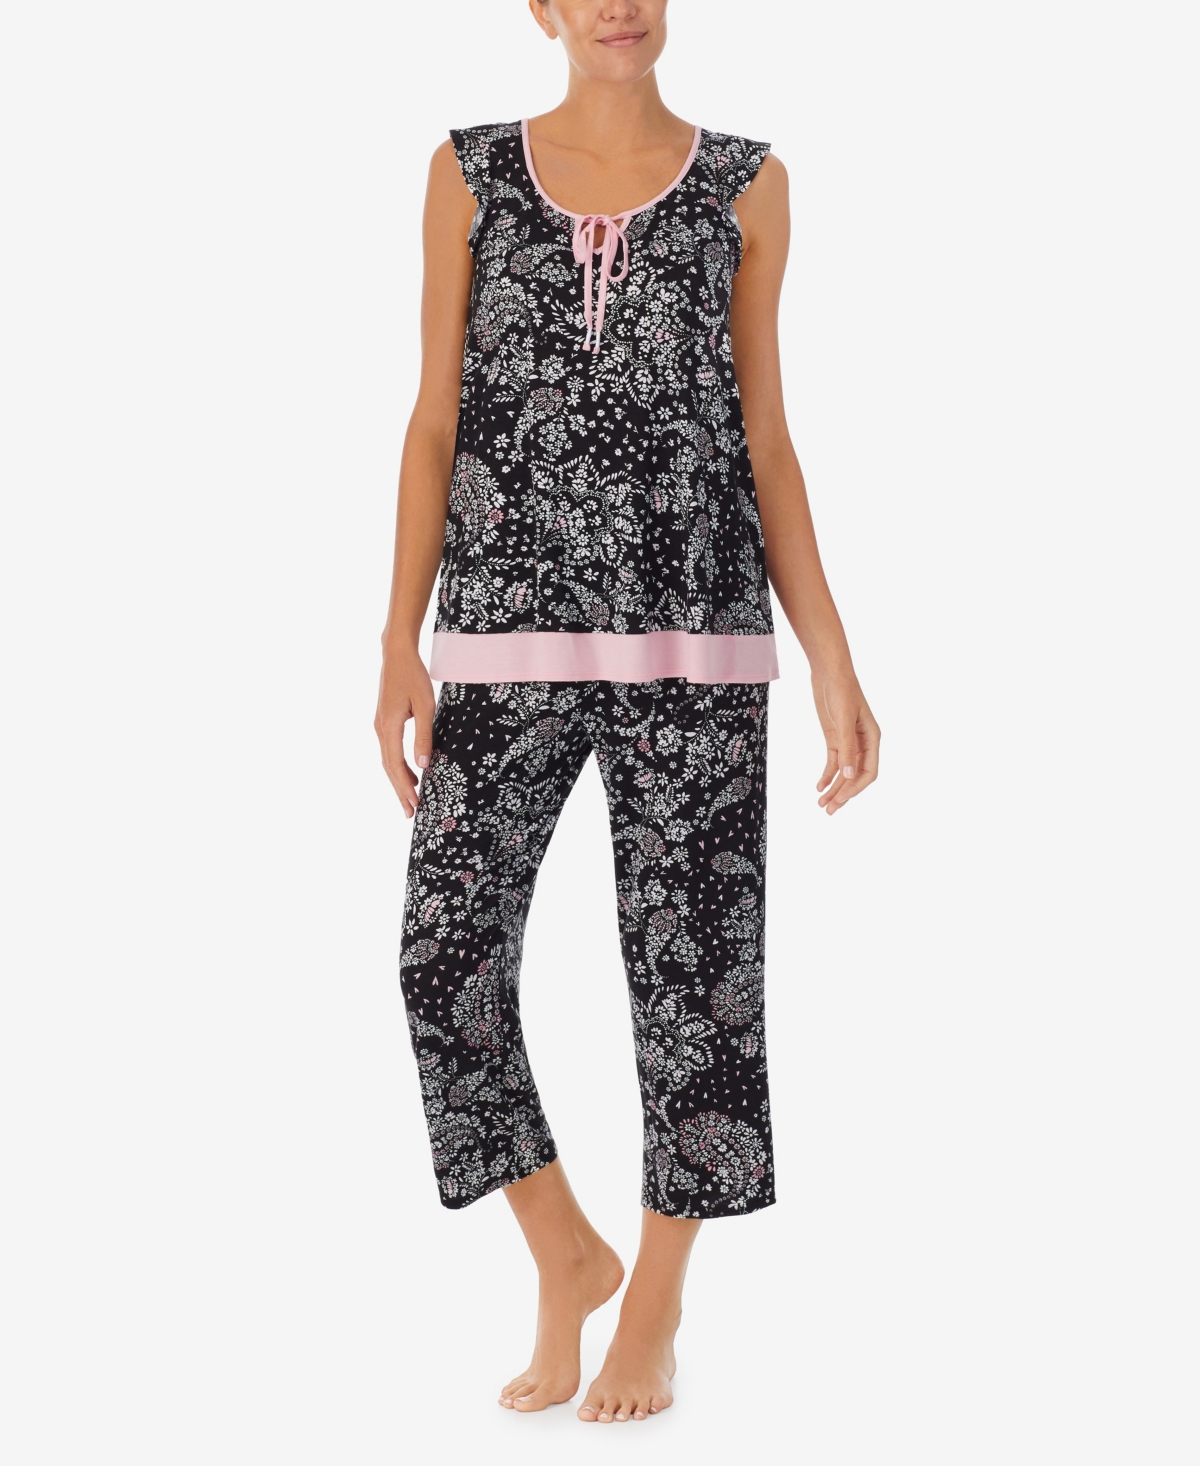 Ellen Tracy Women's Cap Sleeve Pajamas Set